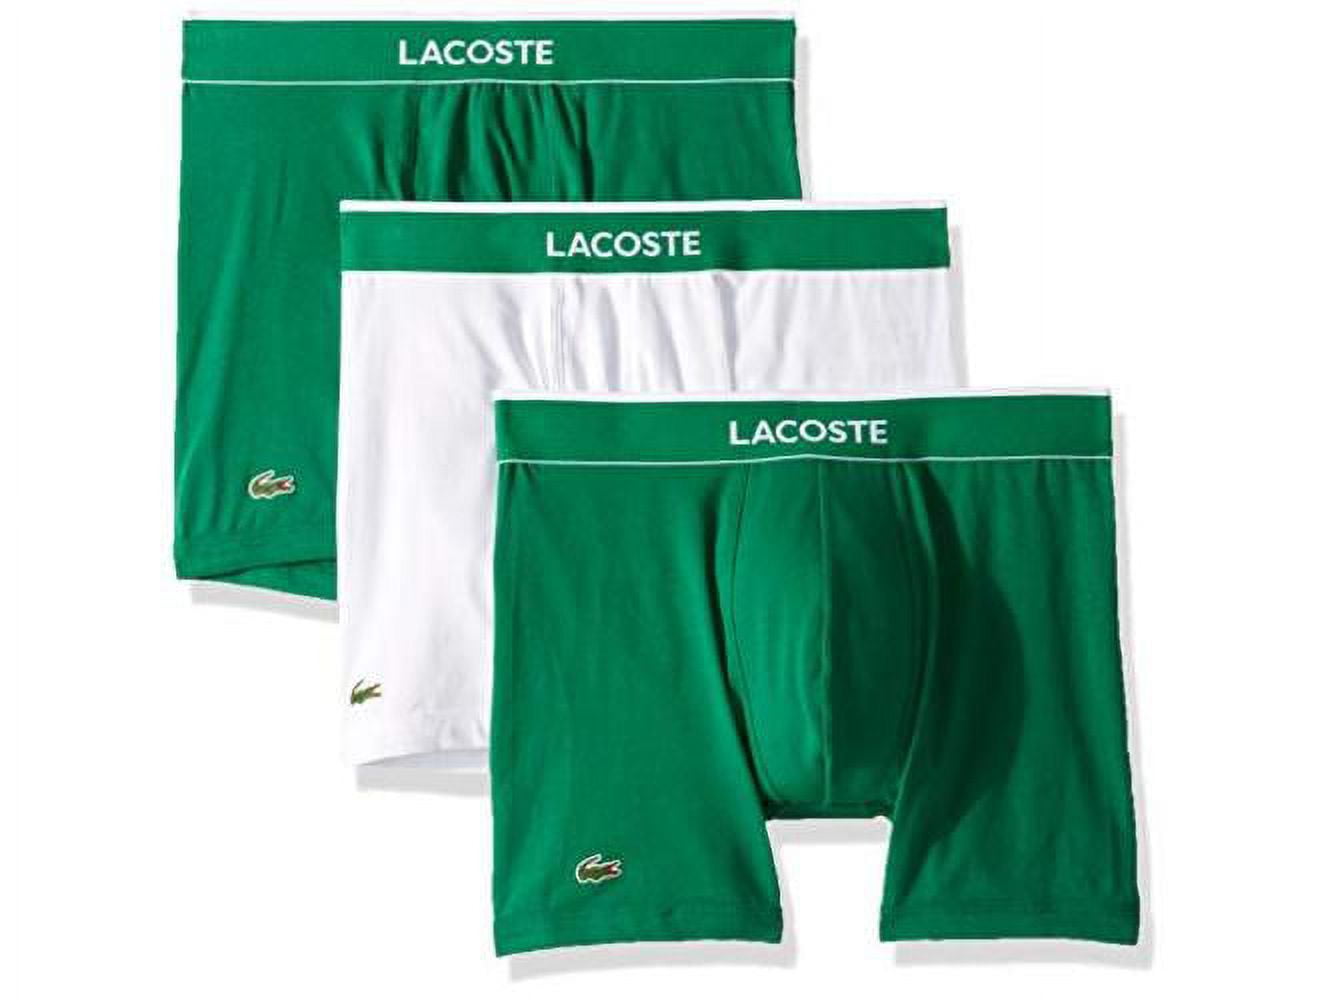 Lacoste Men's Cotton Stretch Boxer Brief Underwear,, Green, Size Large 